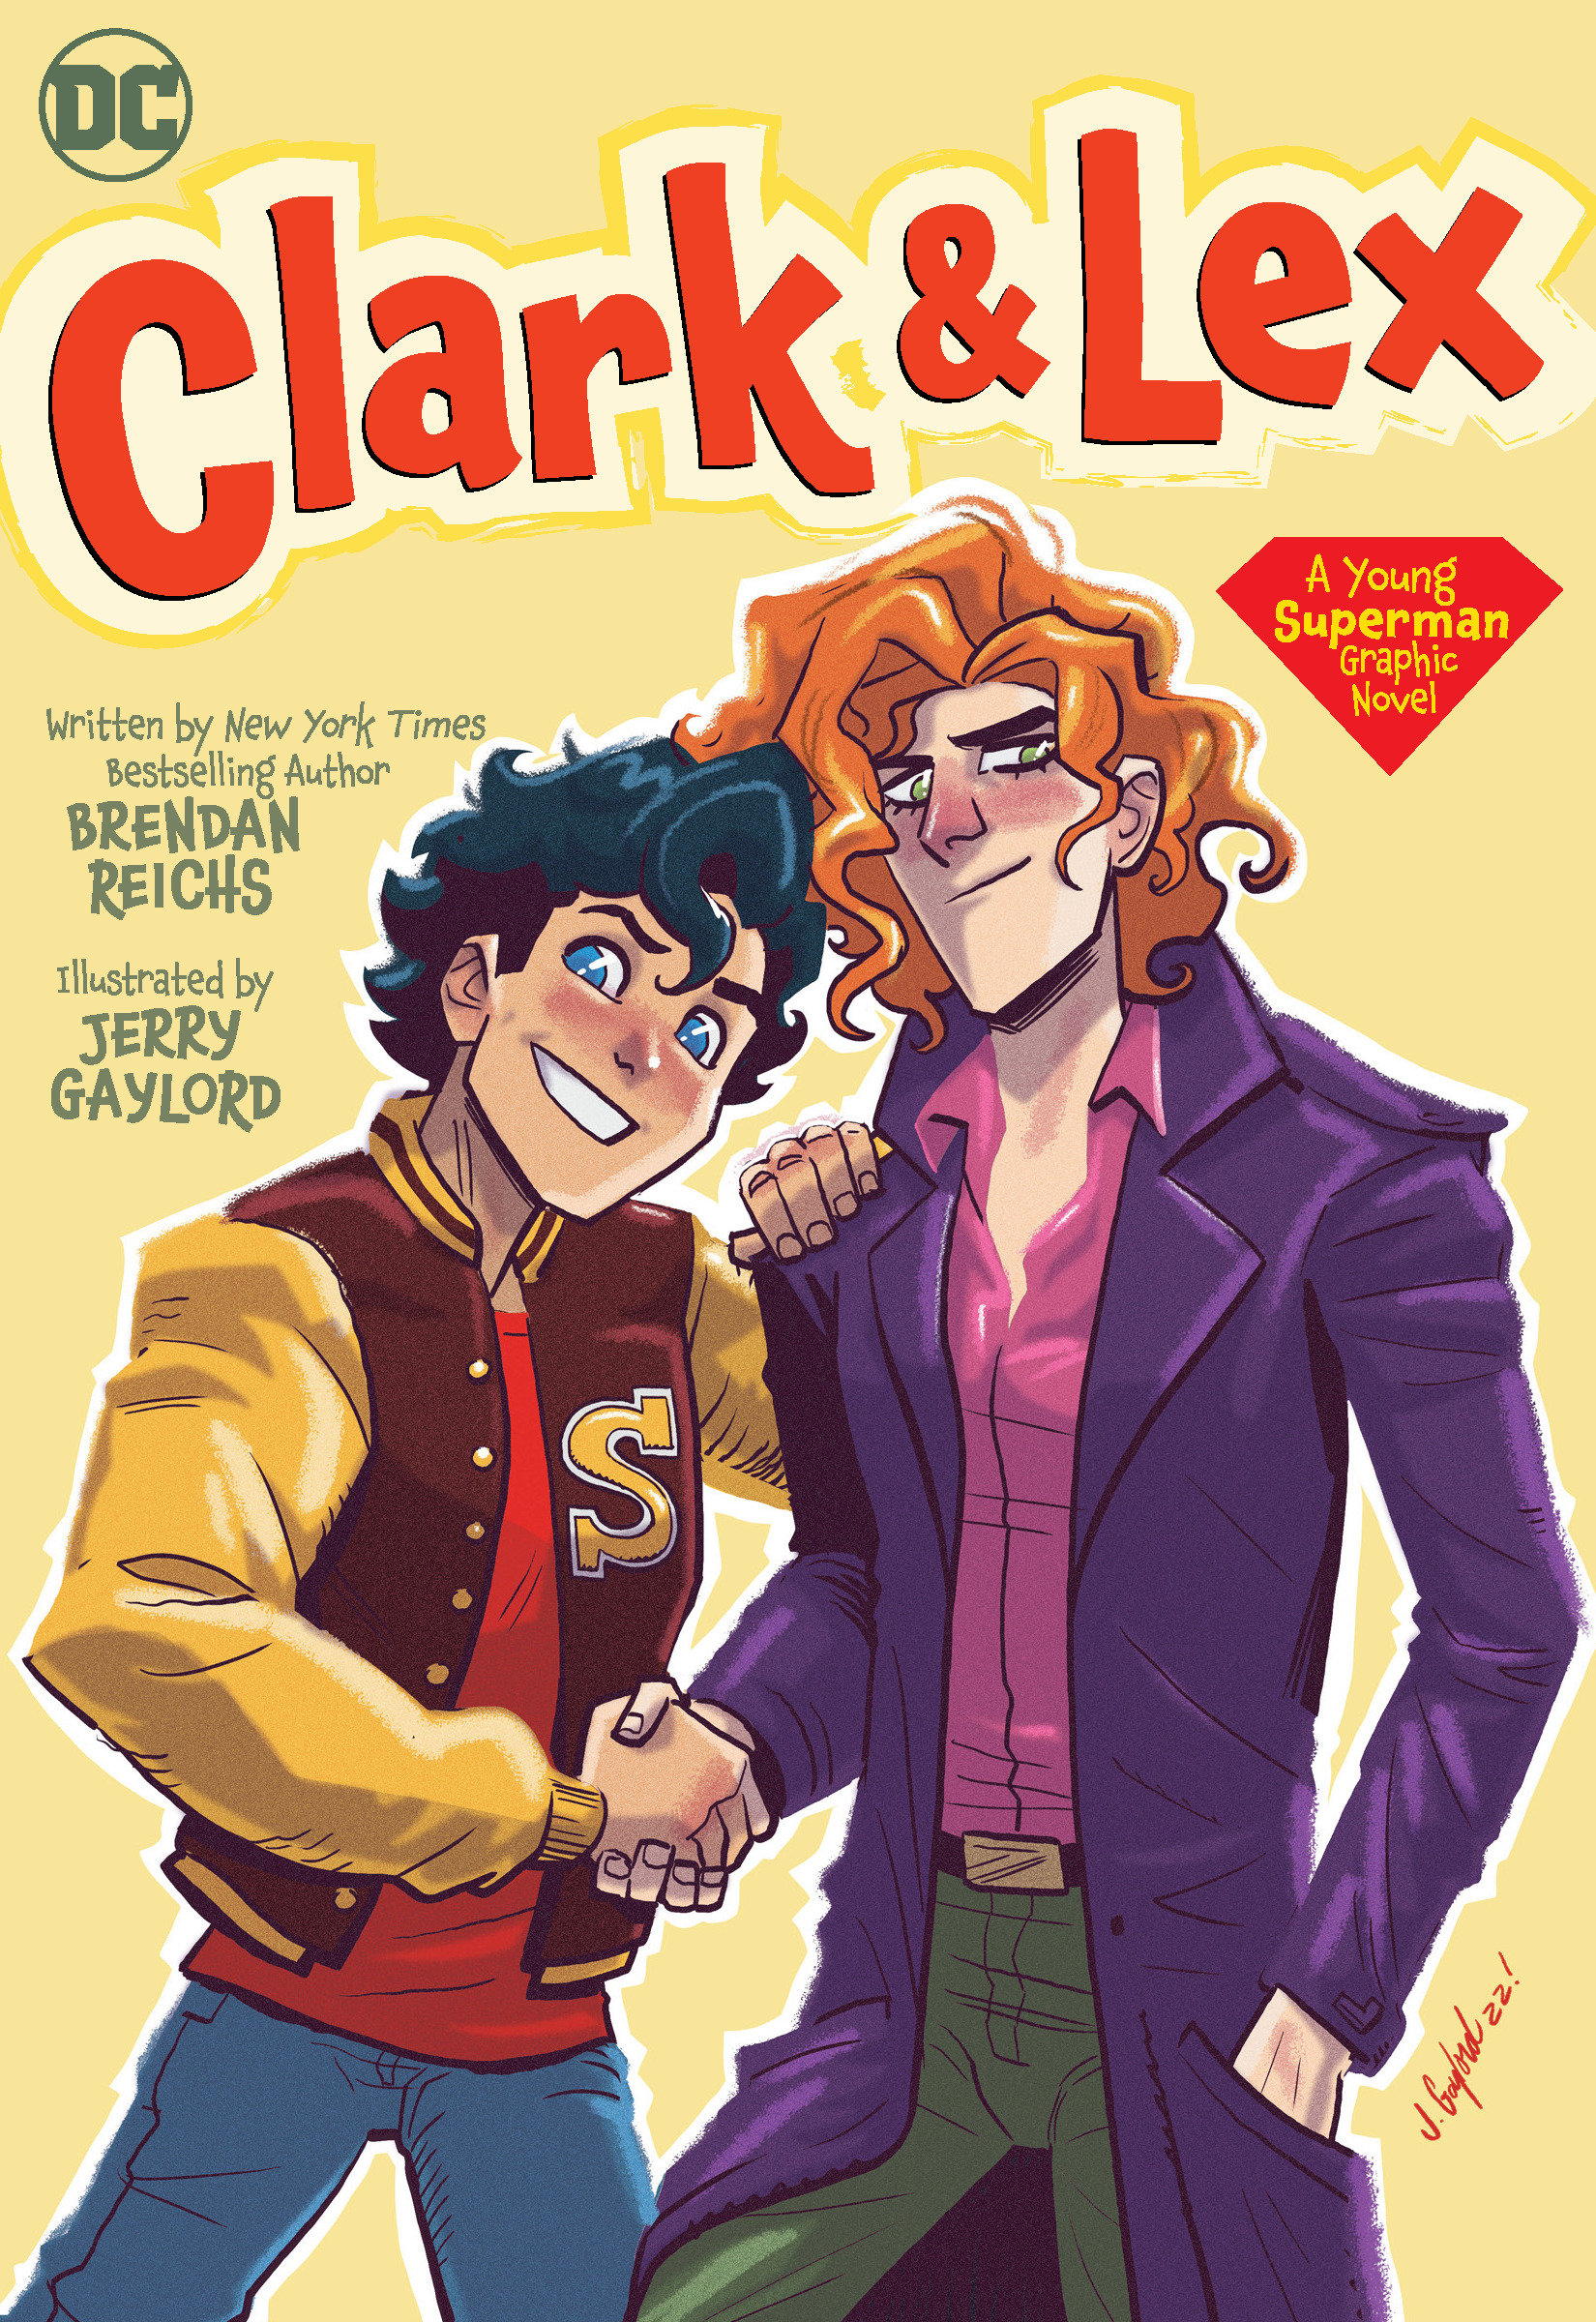 Clark & Lex Graphic Novel